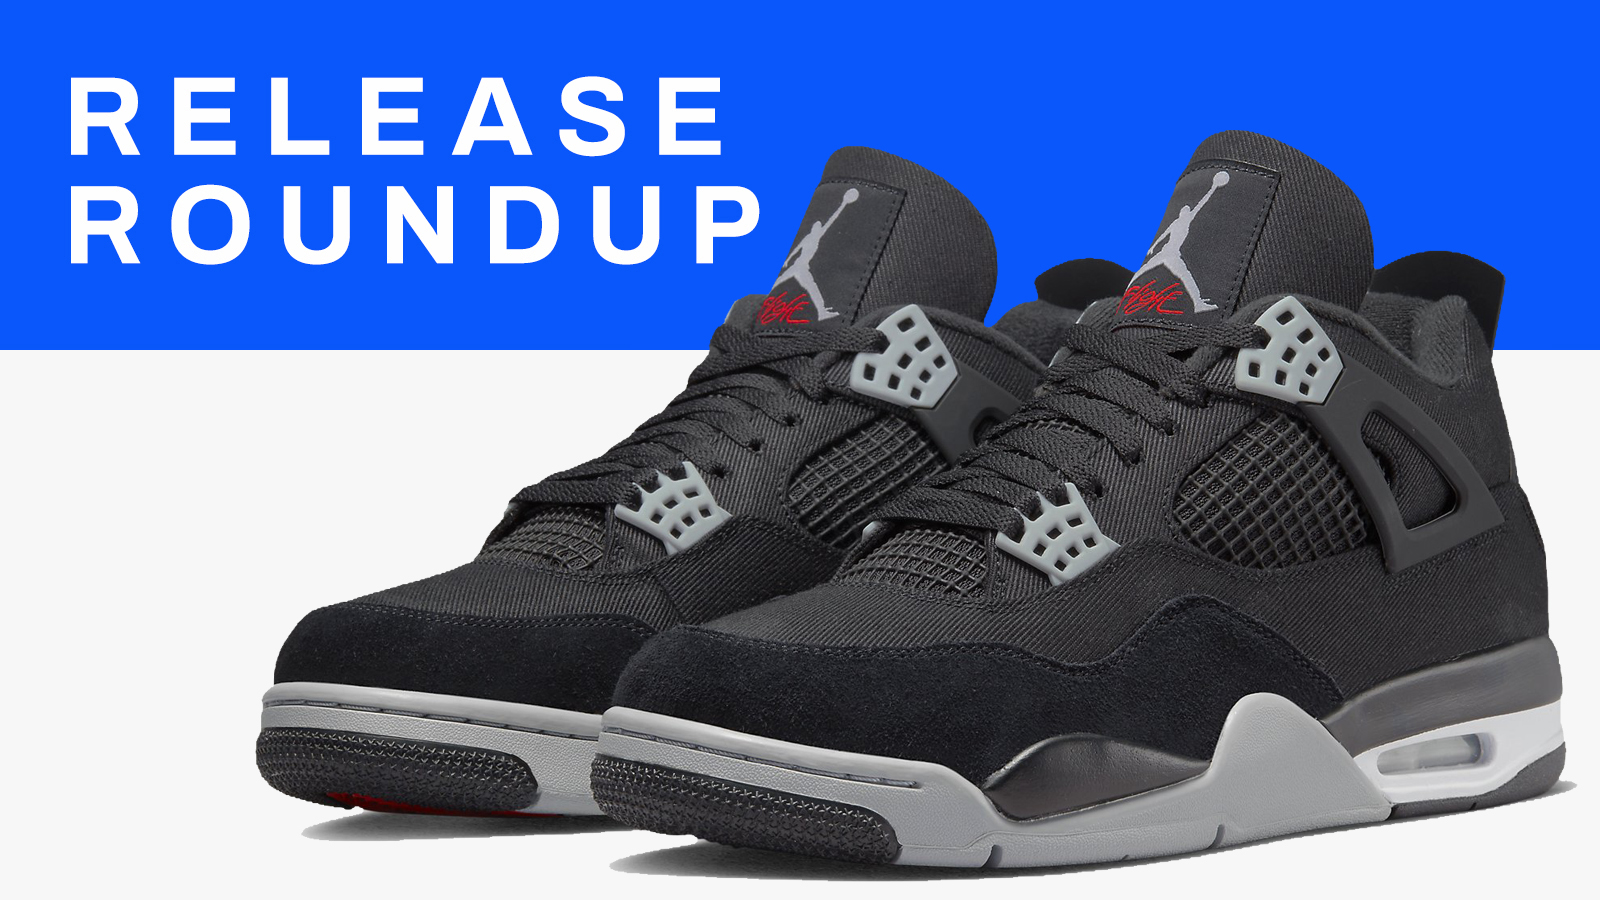 Custom Jordan 1s - I call these the Bubblegum's. : r/Sneakers